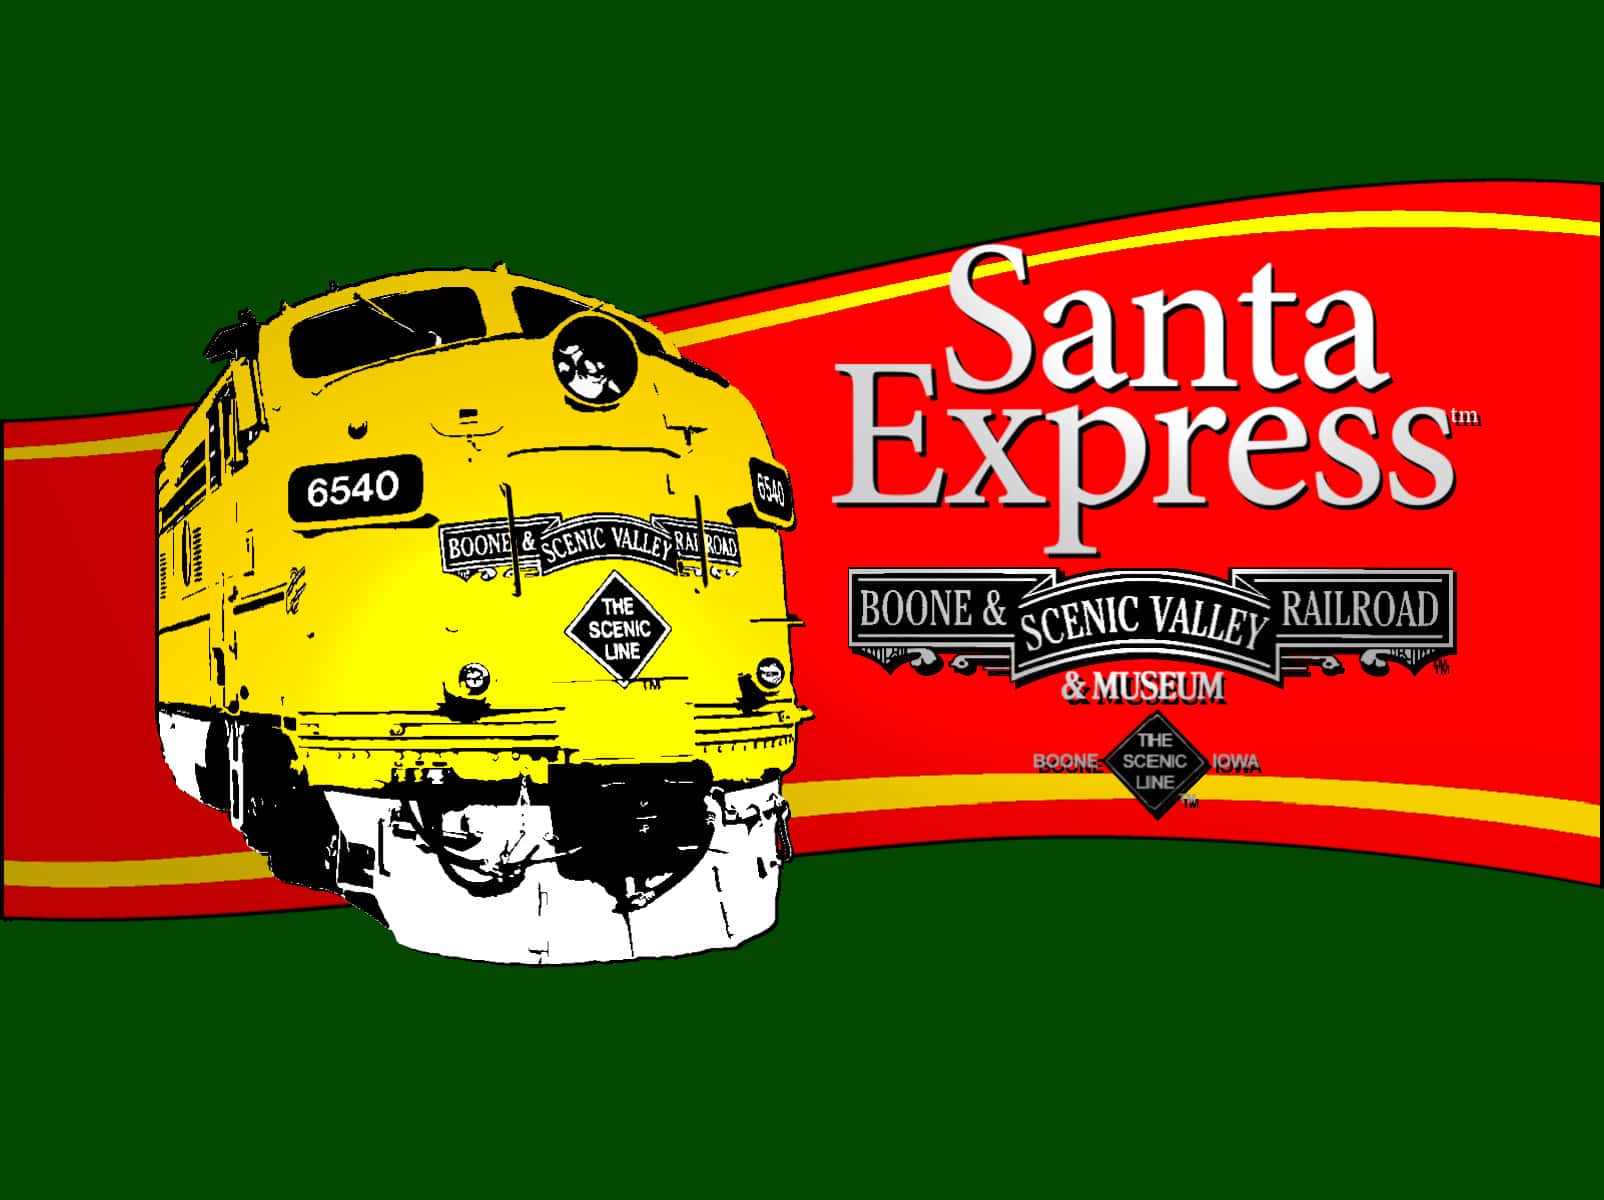 Santa Express trains at the Boone & Scenic Valley Railroad Carroll